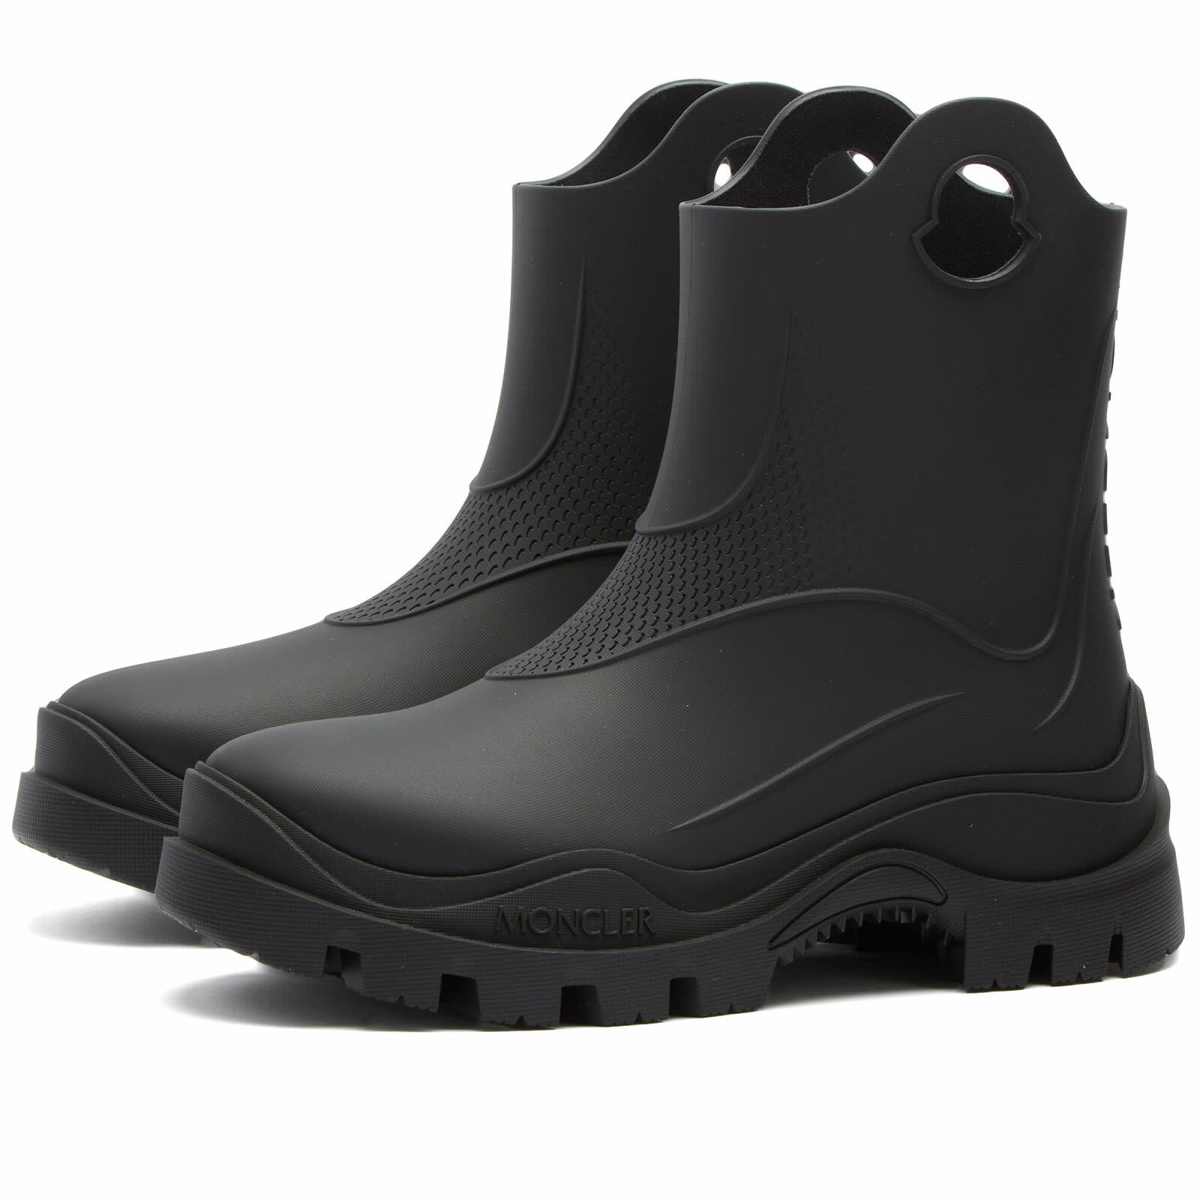 Photo: Moncler Women's Misty Rain Boots in Black